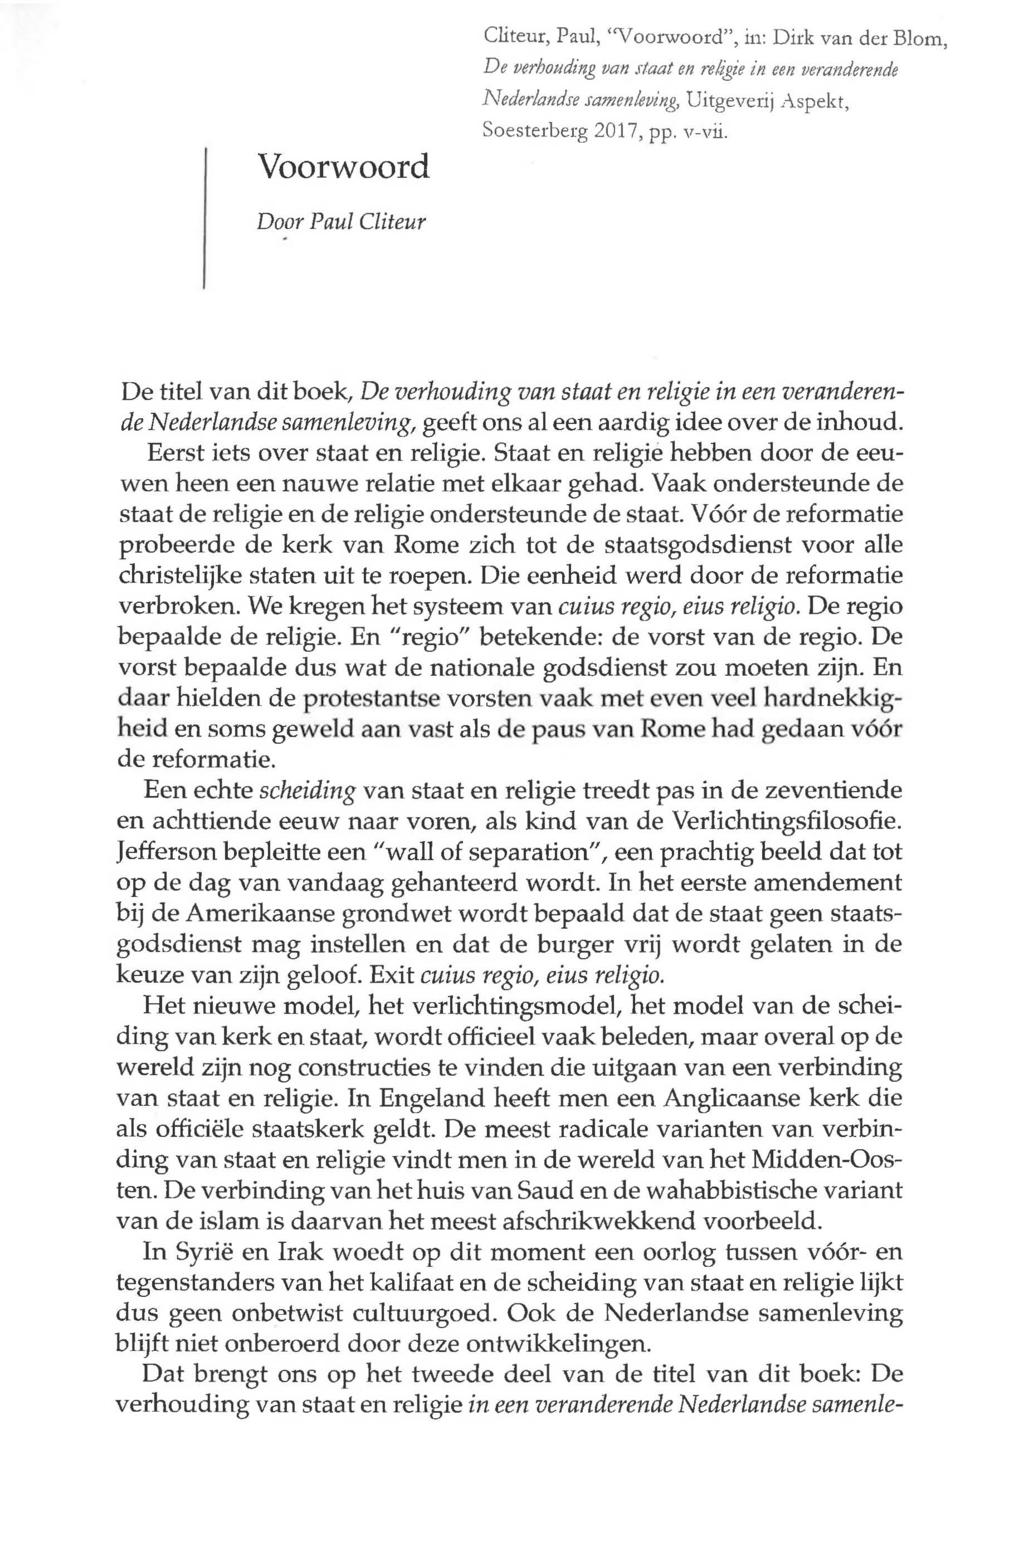 Voorwoord Cliteur, Paul, "Voorwoord", in: Dirk van der Blom, De verhouding van.rtaat en religie in een veranderende Nederlandse samen!eving, Uitgeverij,-\.spekt, Soesterberg 2017, pp. v-vii.